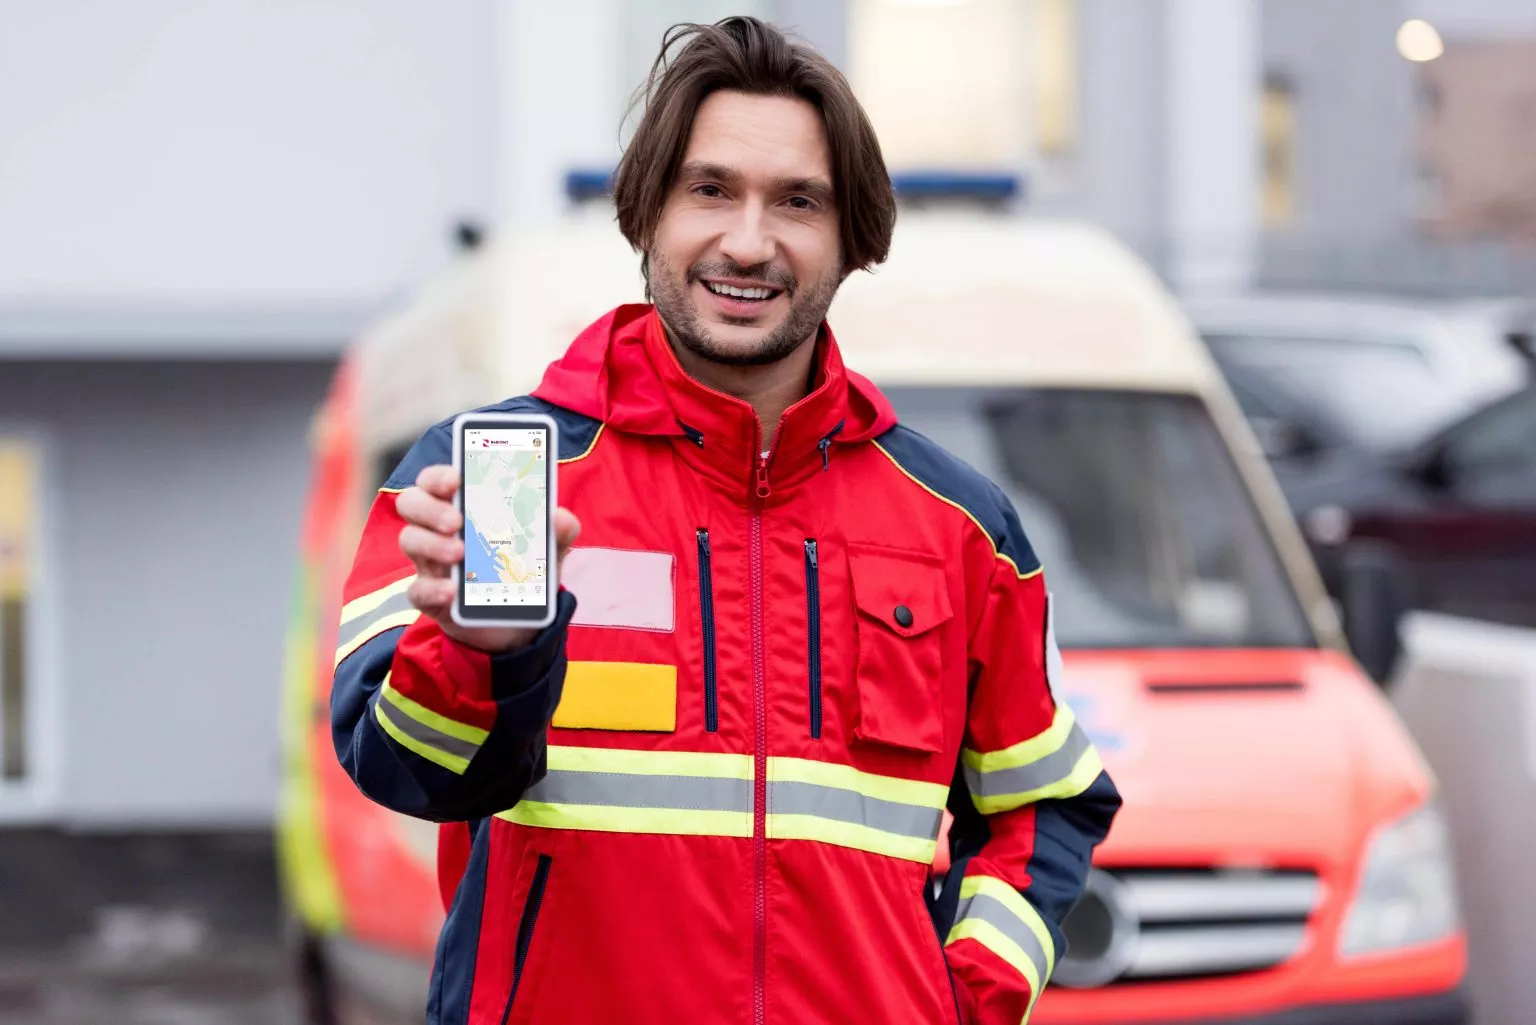 smiling-paramedic-in-red-uniform-holding-smartphon-2022-12-10-01-16-22-utc-1536x1025